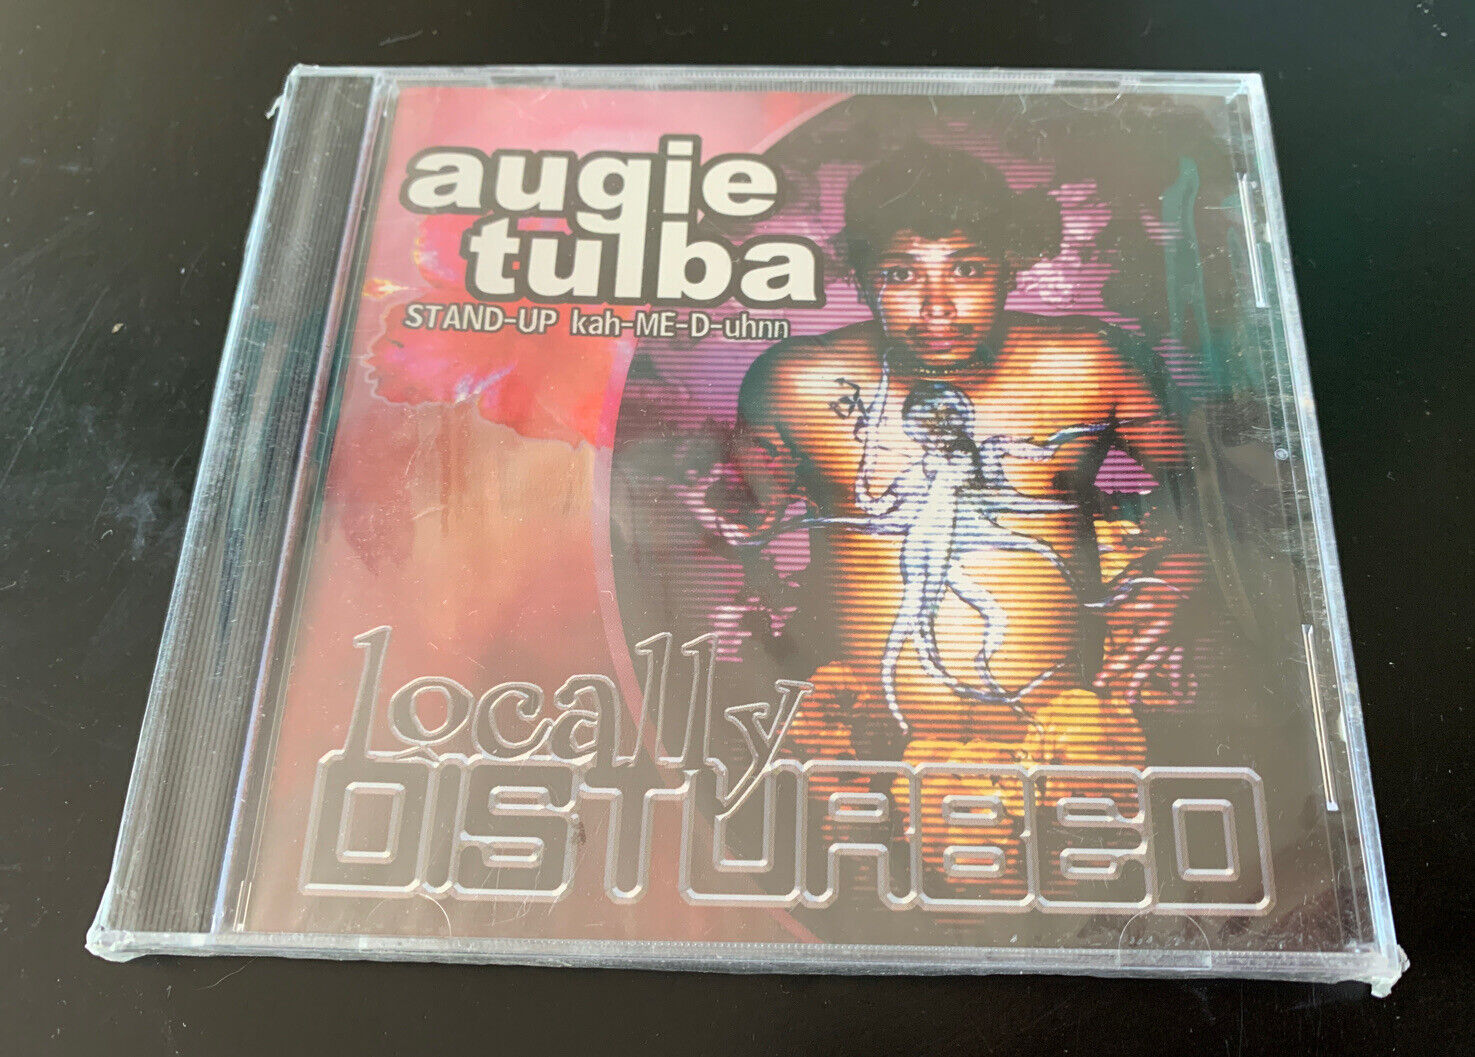 NEW Locally Disturbed by Augie Tulba CD Hawaiian Local Comedy Stand Up Aloha